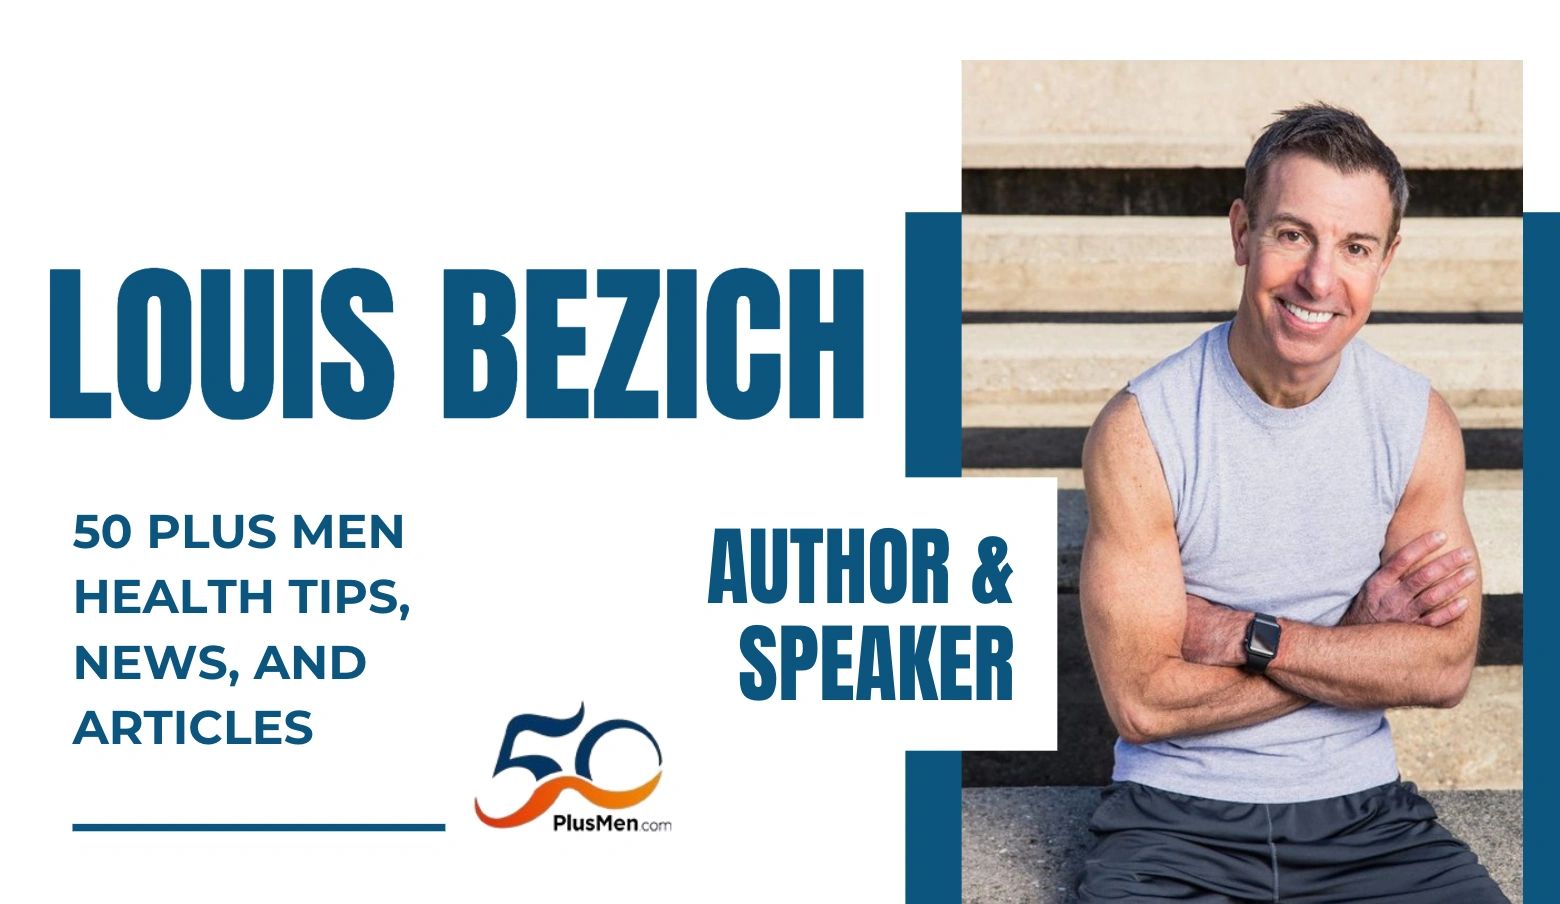 Louis Bezich: Author & Speaker. 50 PLUS MEN HEALTH TIPS, NEWS, AND ARTICLES.